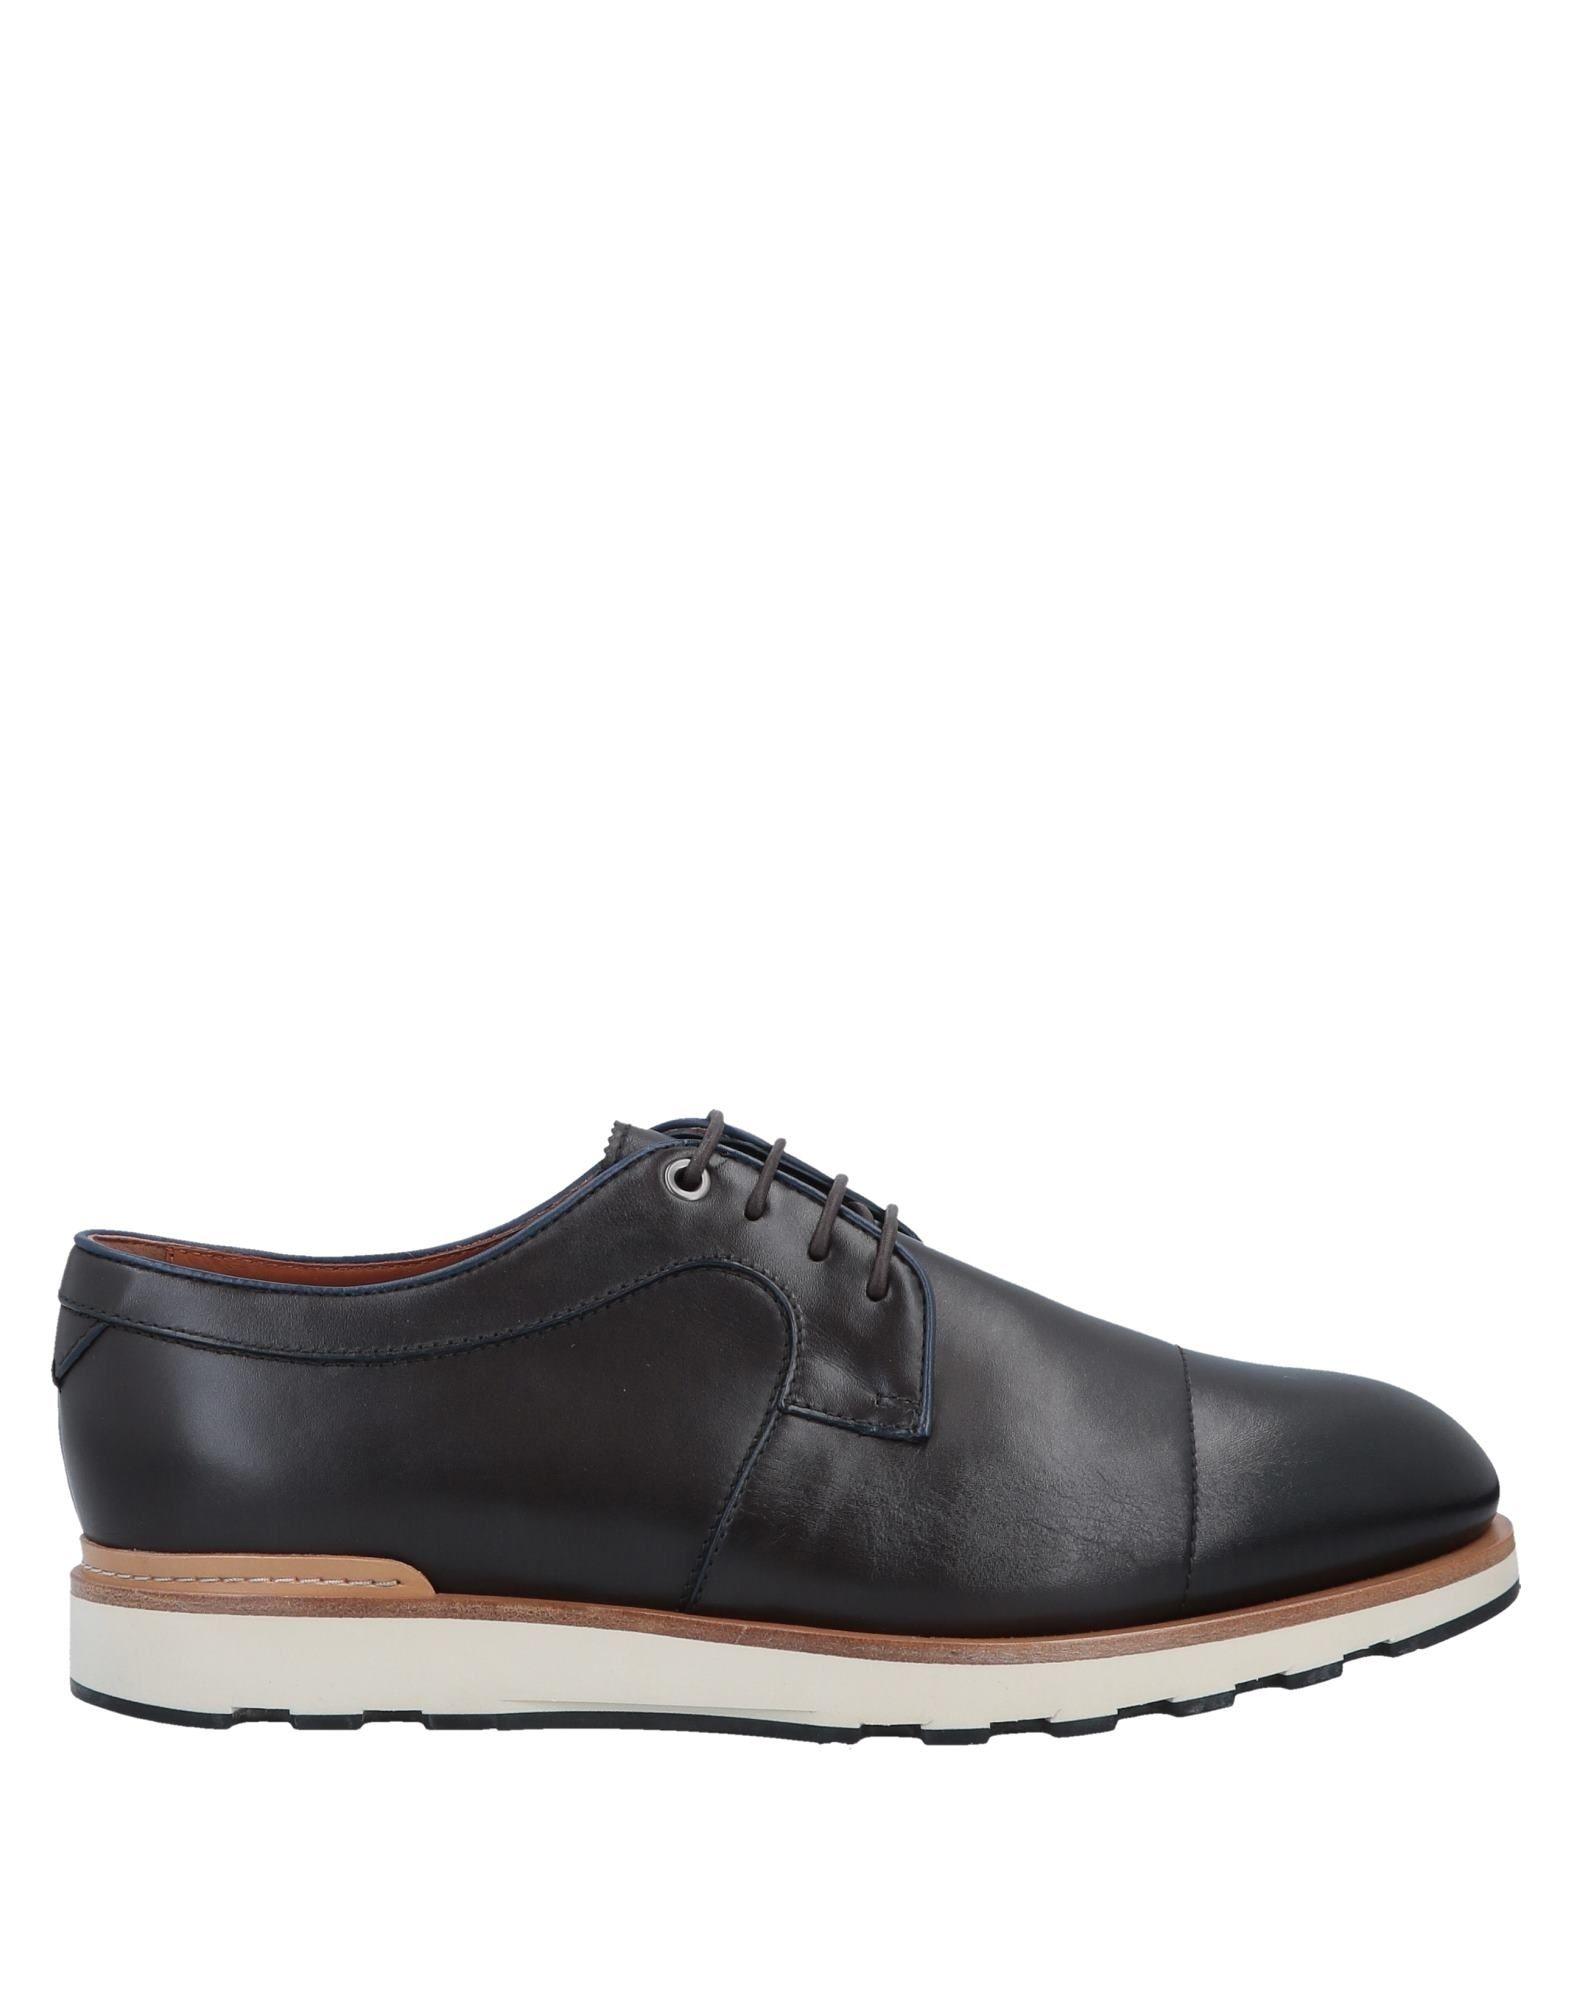 Ermenegildo Zegna Leather Lace-up Shoe in Dark Brown (Brown) for Men - Lyst